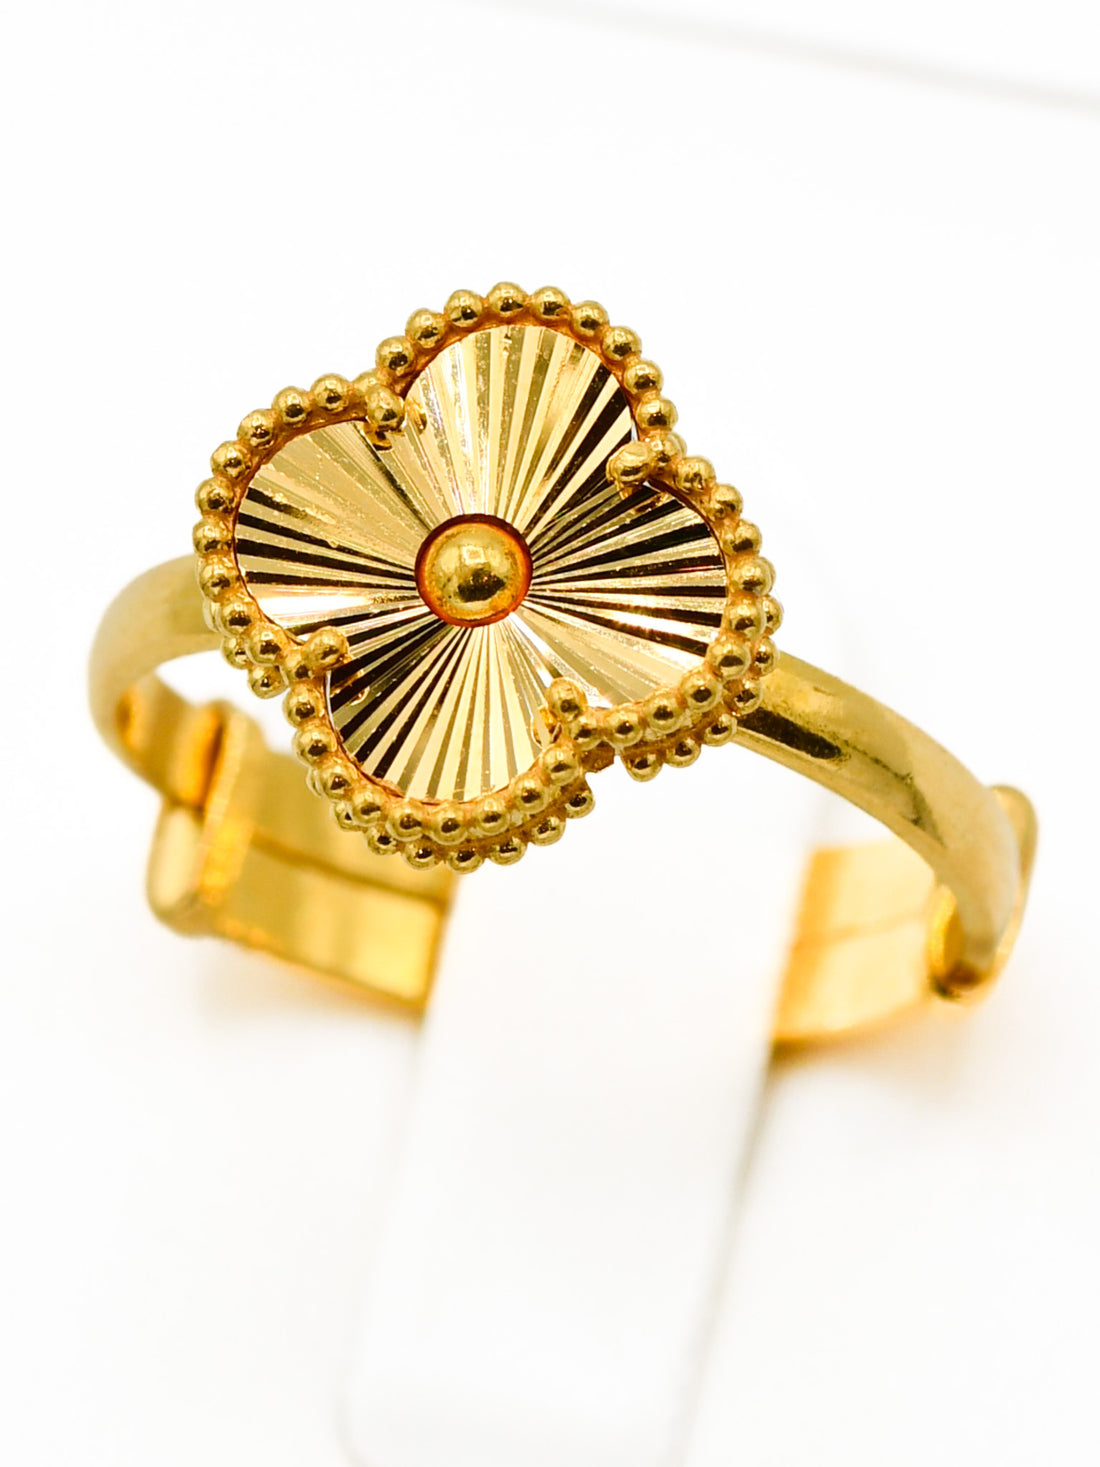 22ct Gold Adjustable Ladies Ring